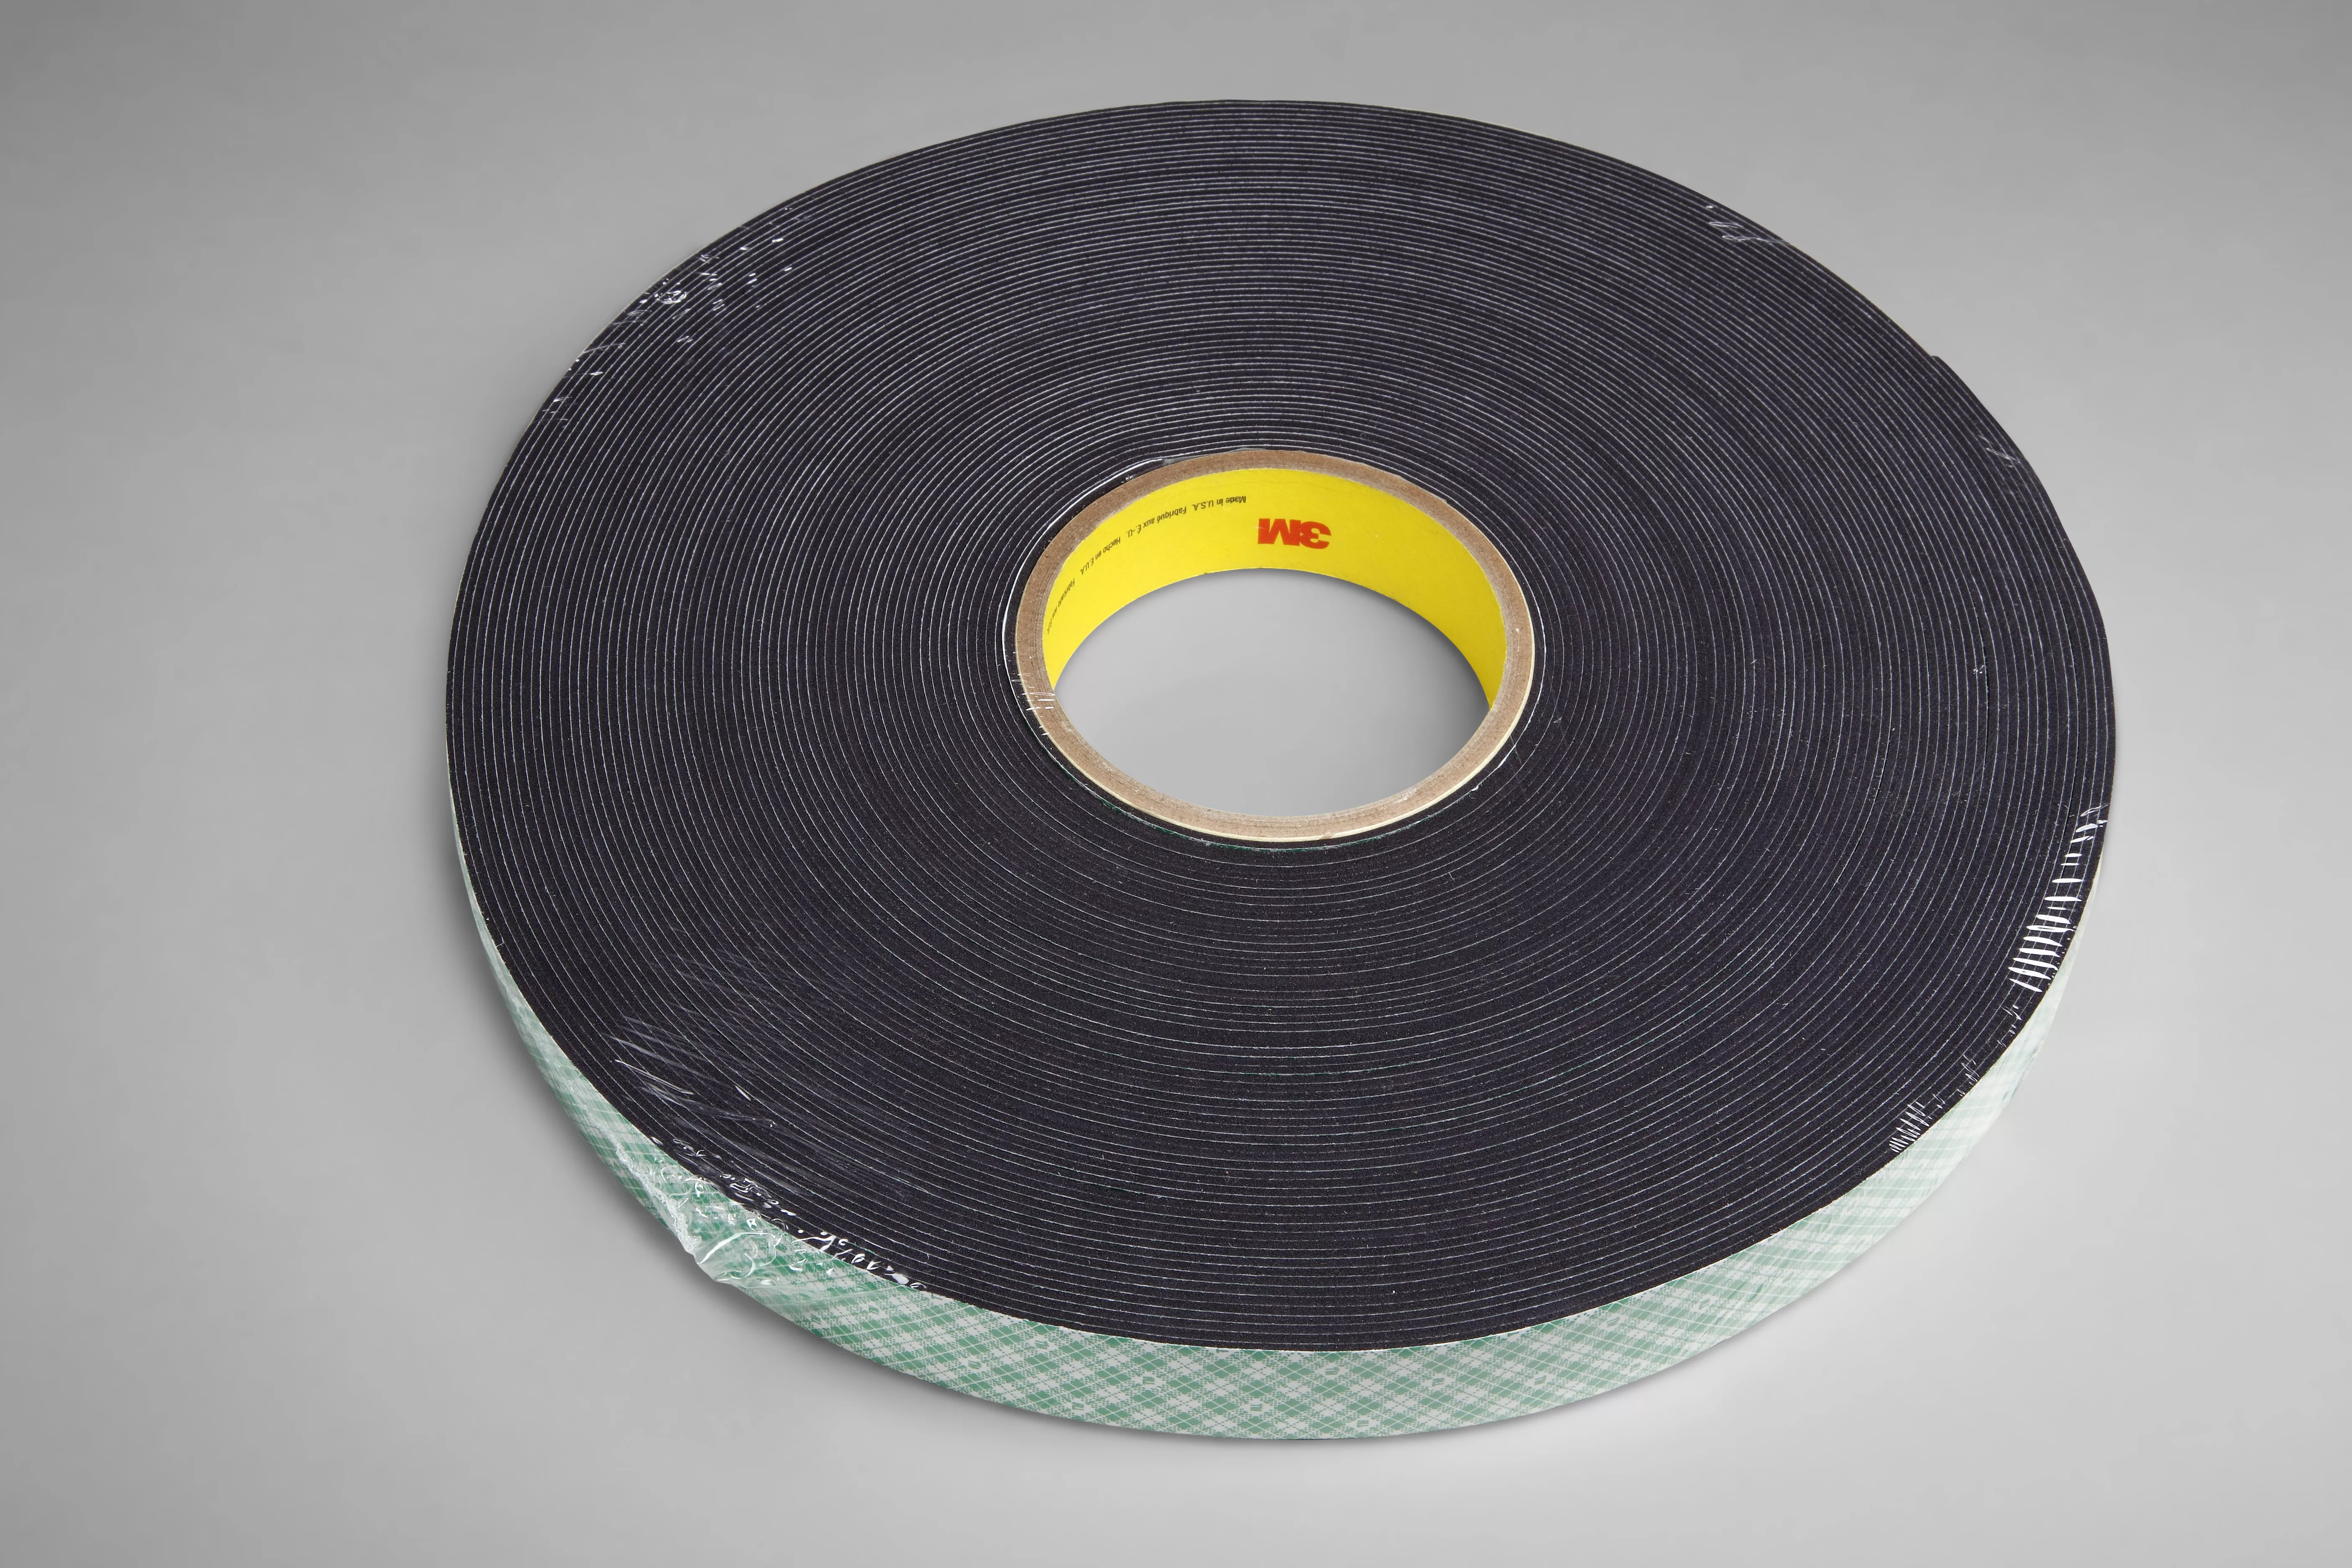 3M™ Double Coated Urethane Foam Tape 4052, Black, 3/4 in x 72 yd, 31
mil, 12 Roll/Case